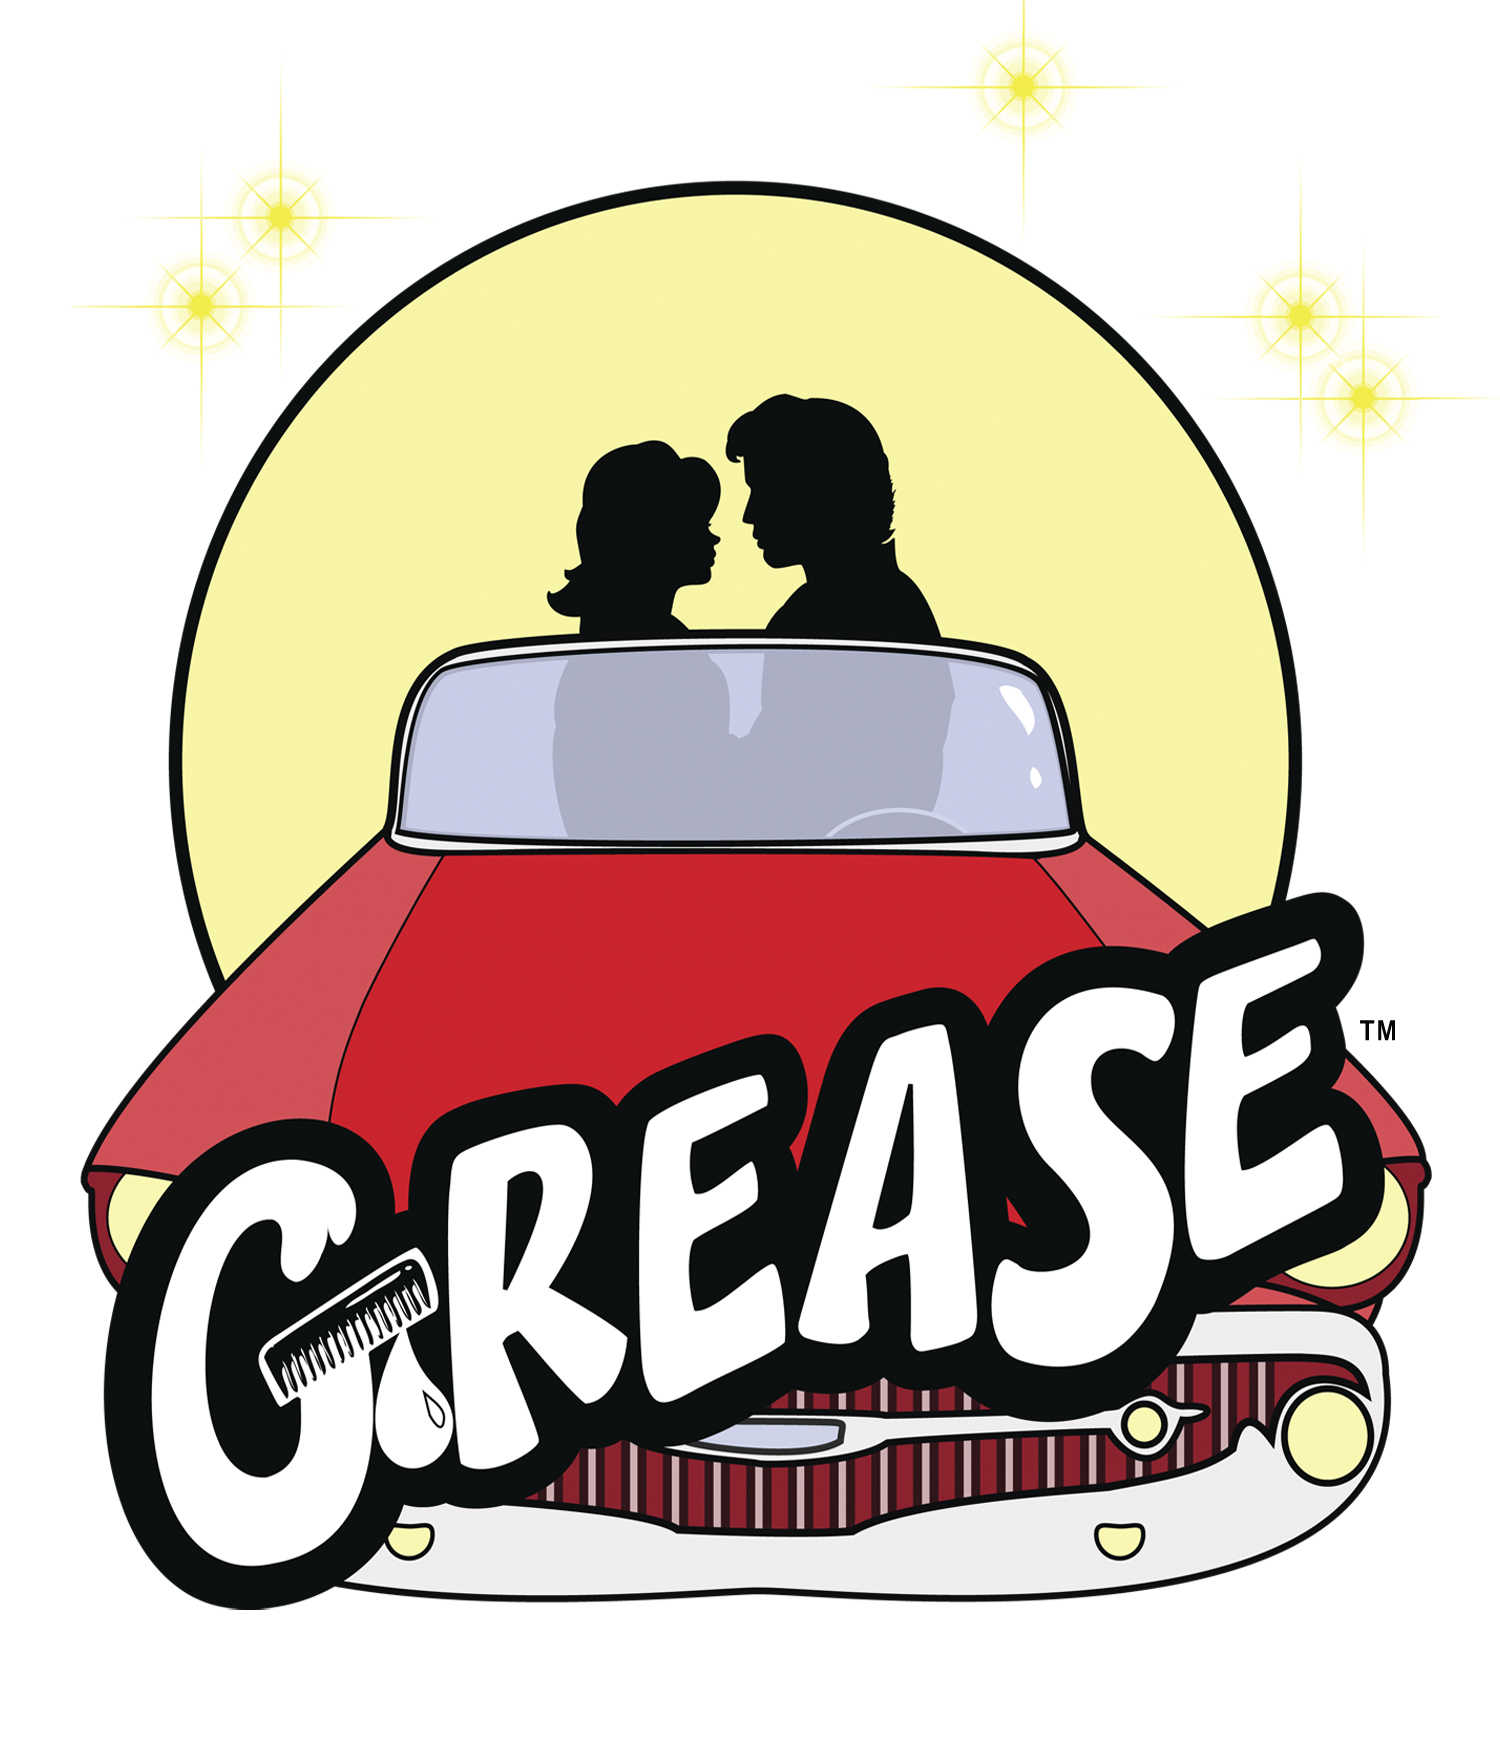 grease-logo